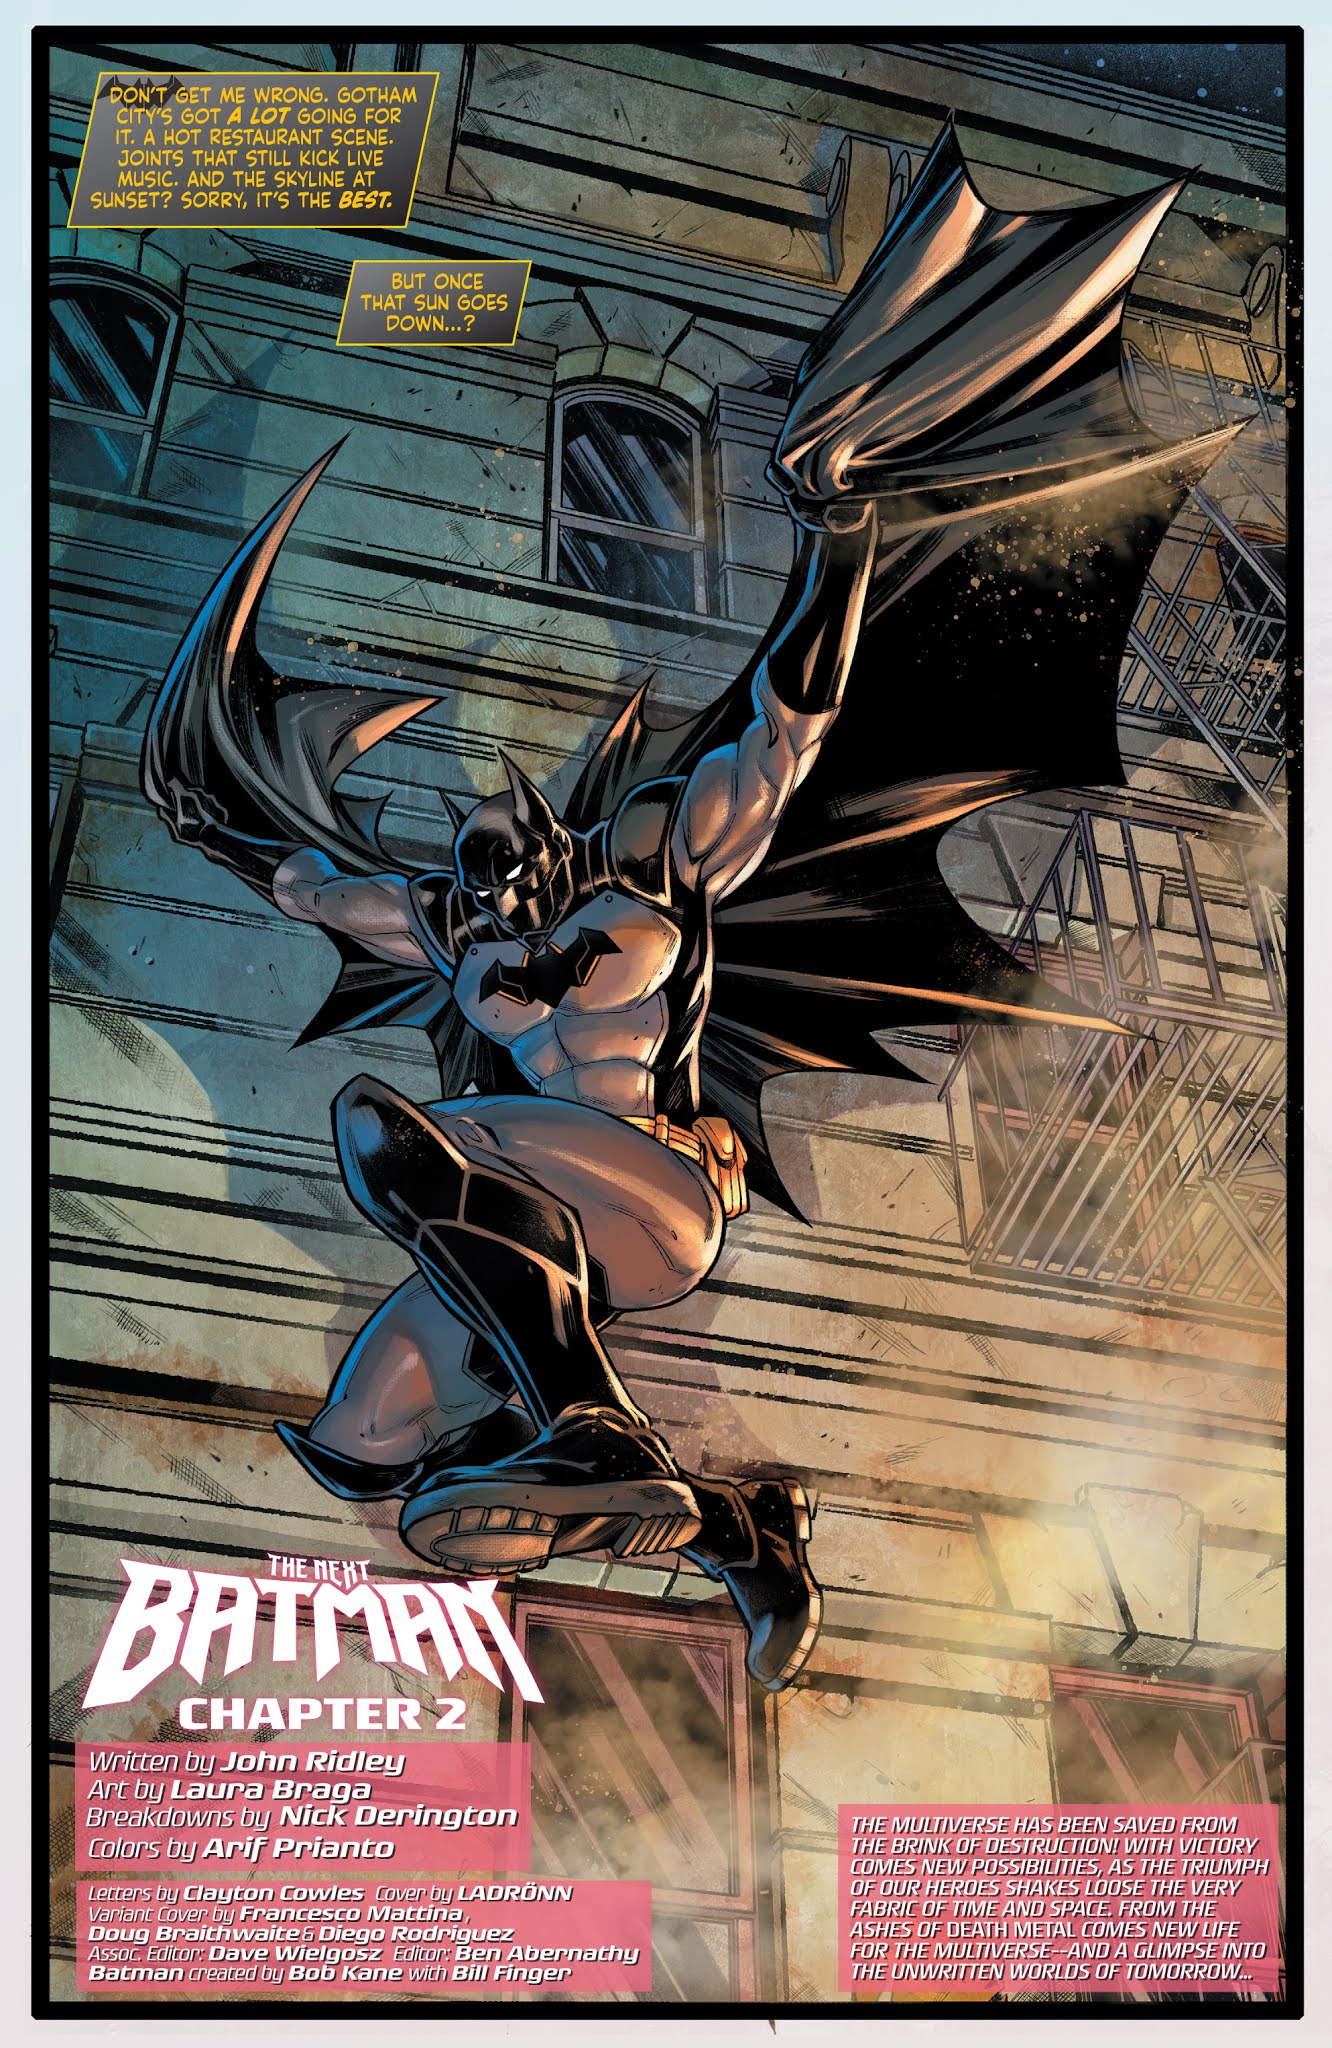 Weird Science DC Comics: PREVIEW: Future State: The Next Batman #2